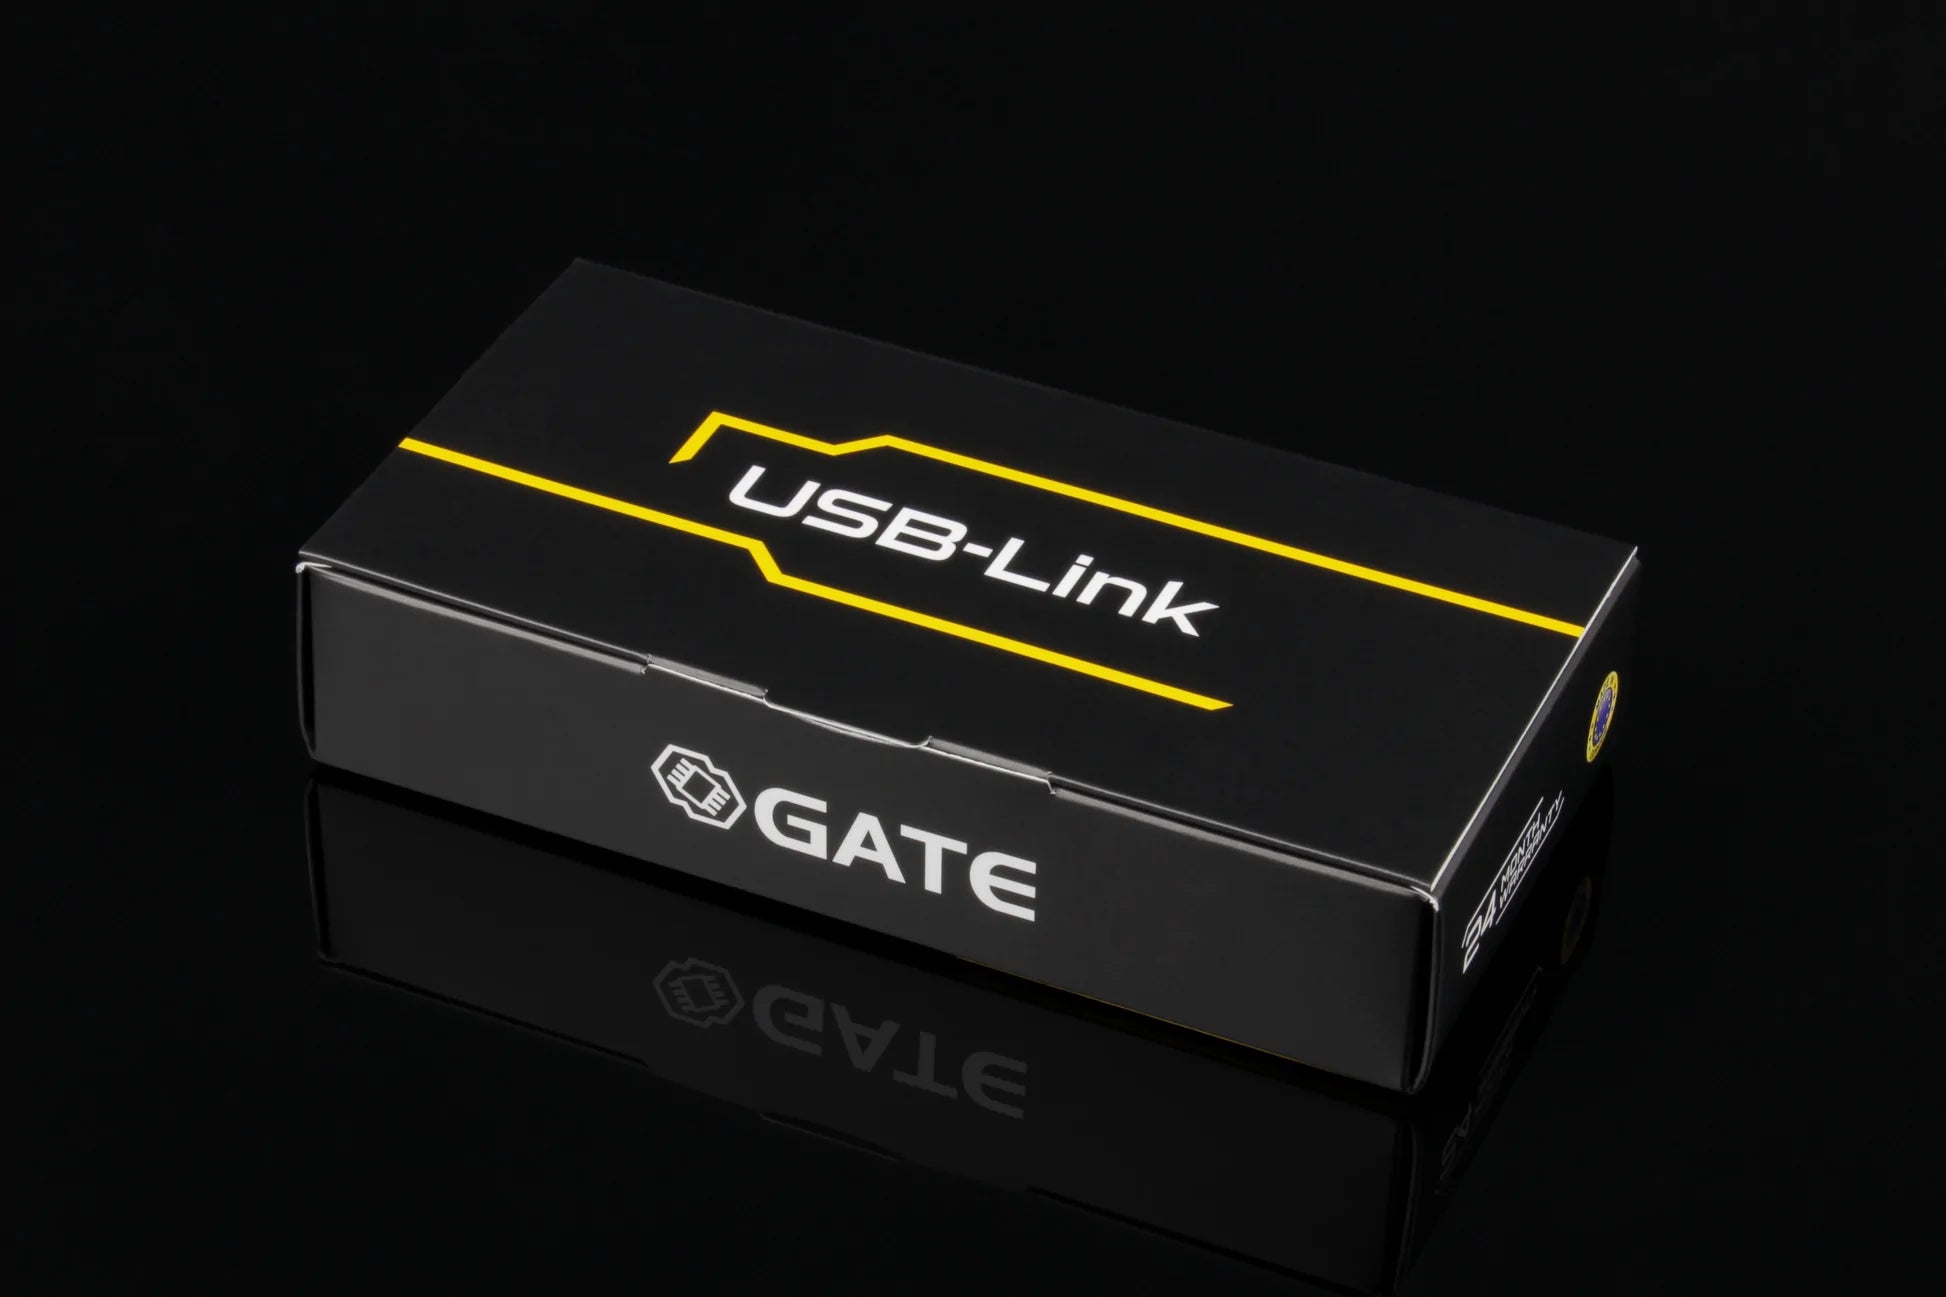 GATE USB-Link For GATE Control Station App | Gate